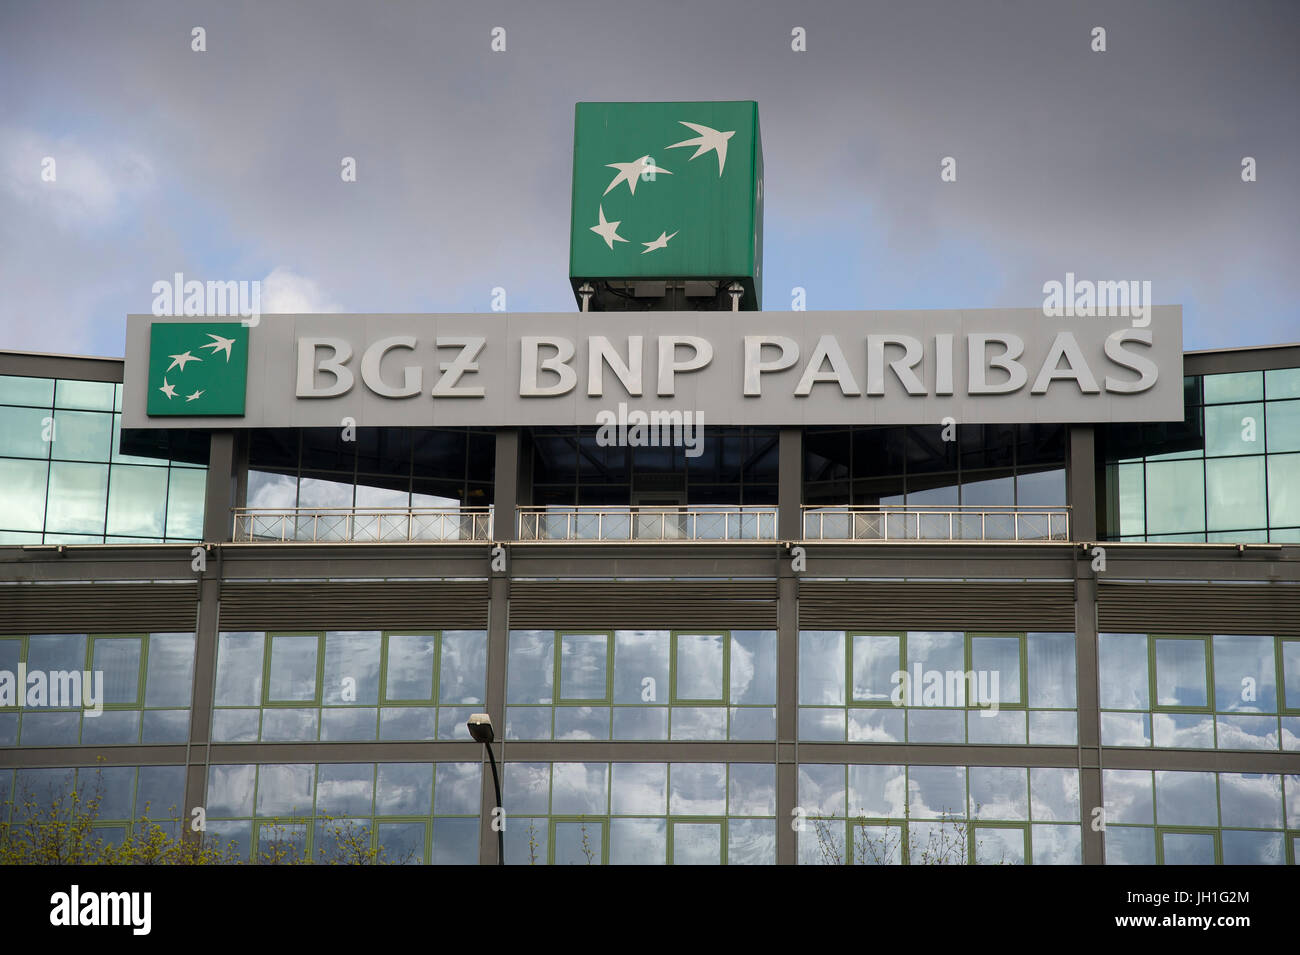 Bgz bnp paribas -Fotos und -Bildmaterial in hoher Auflösung – Alamy